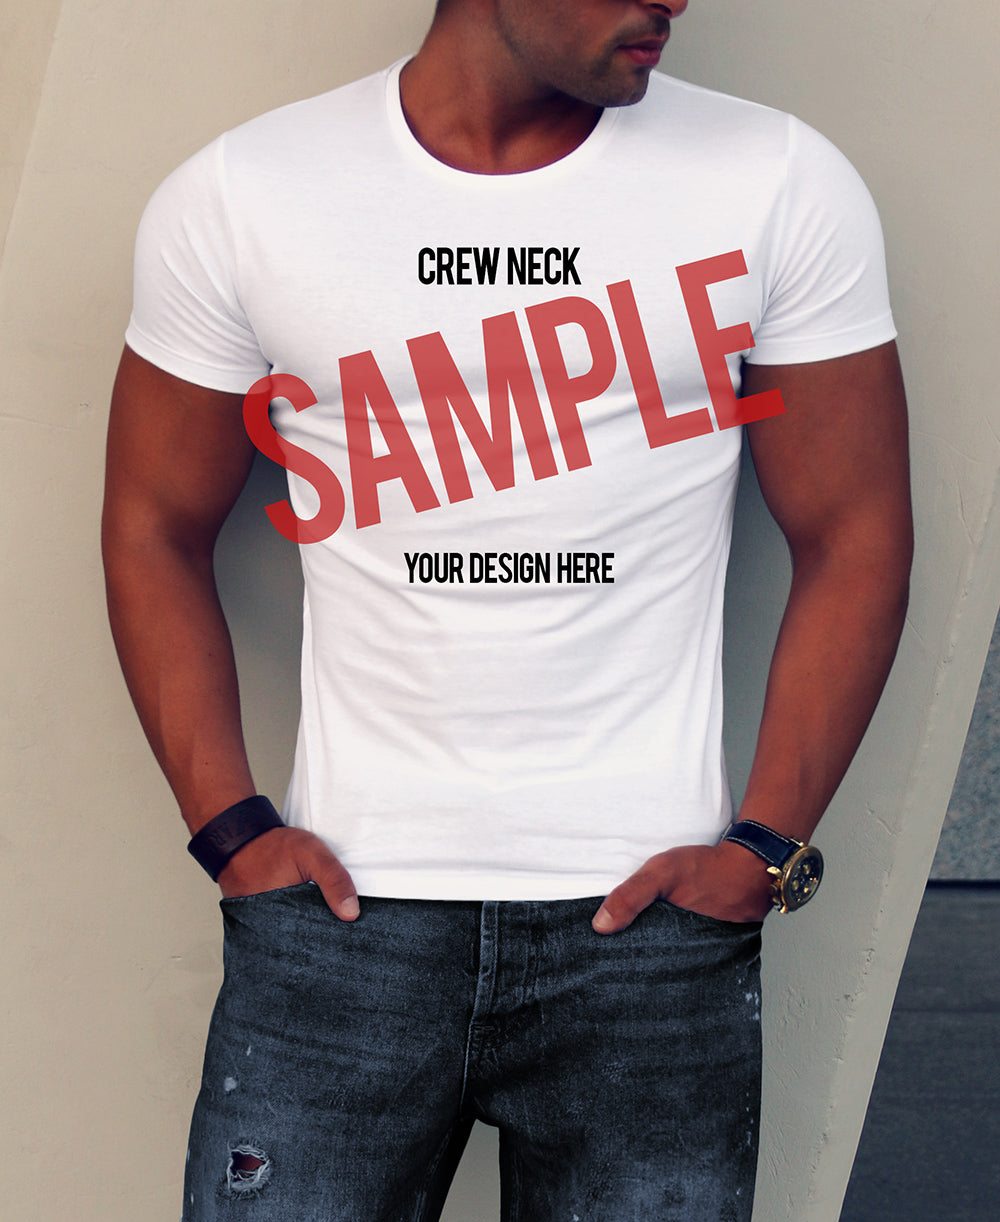 Boss T-shirt Mens Fashion Saying Tee Urban Style Top MD649